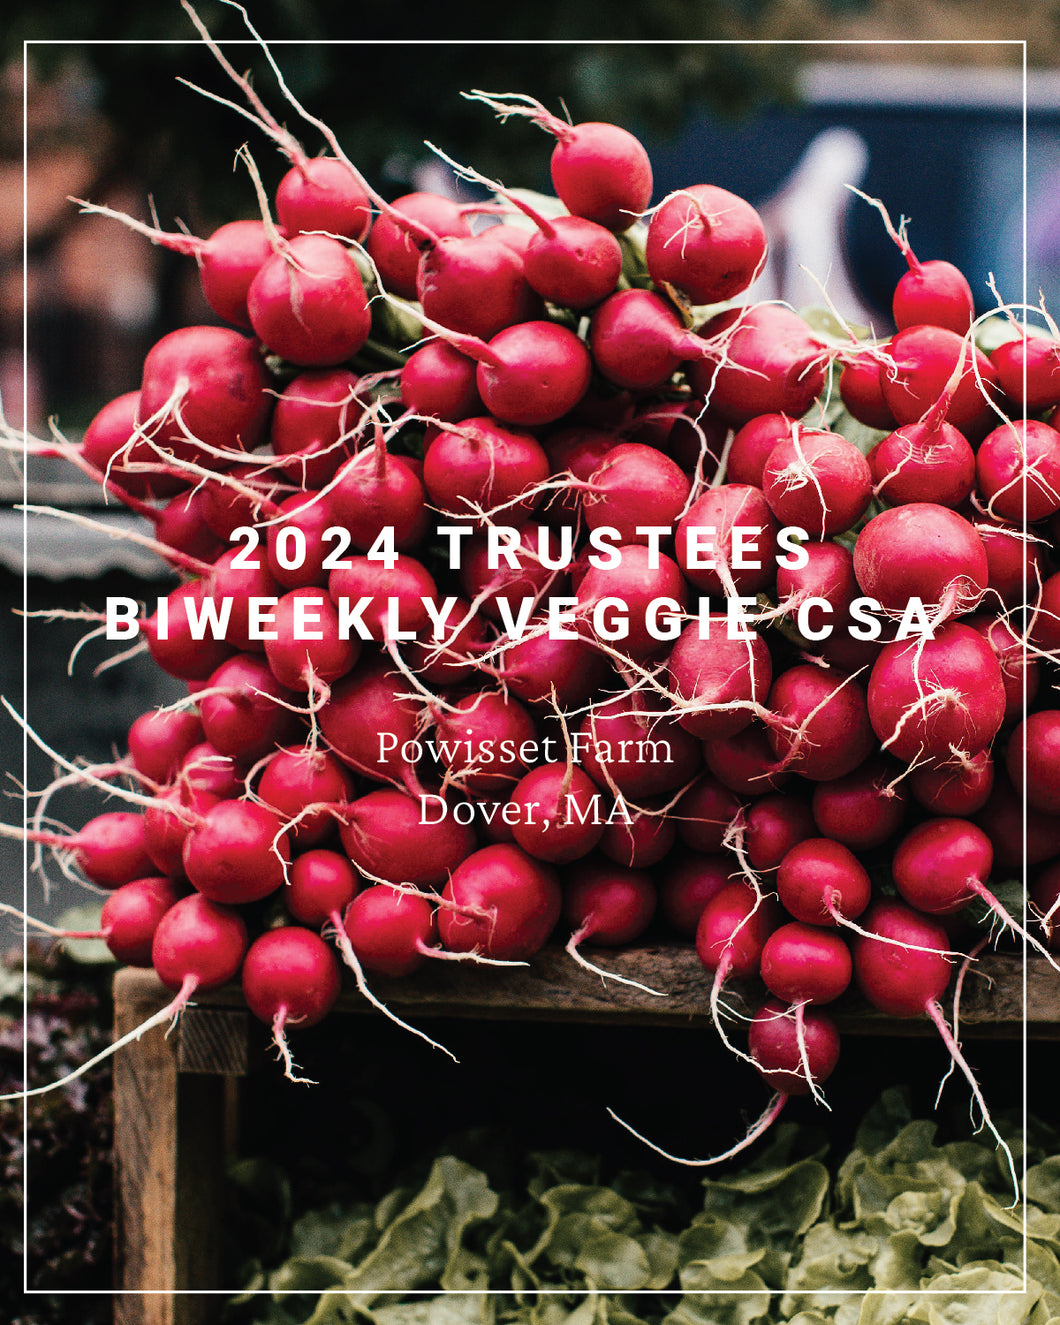 2024 Trustees Veggie CSA - Powisset Farm, Bi-Weekly CSA